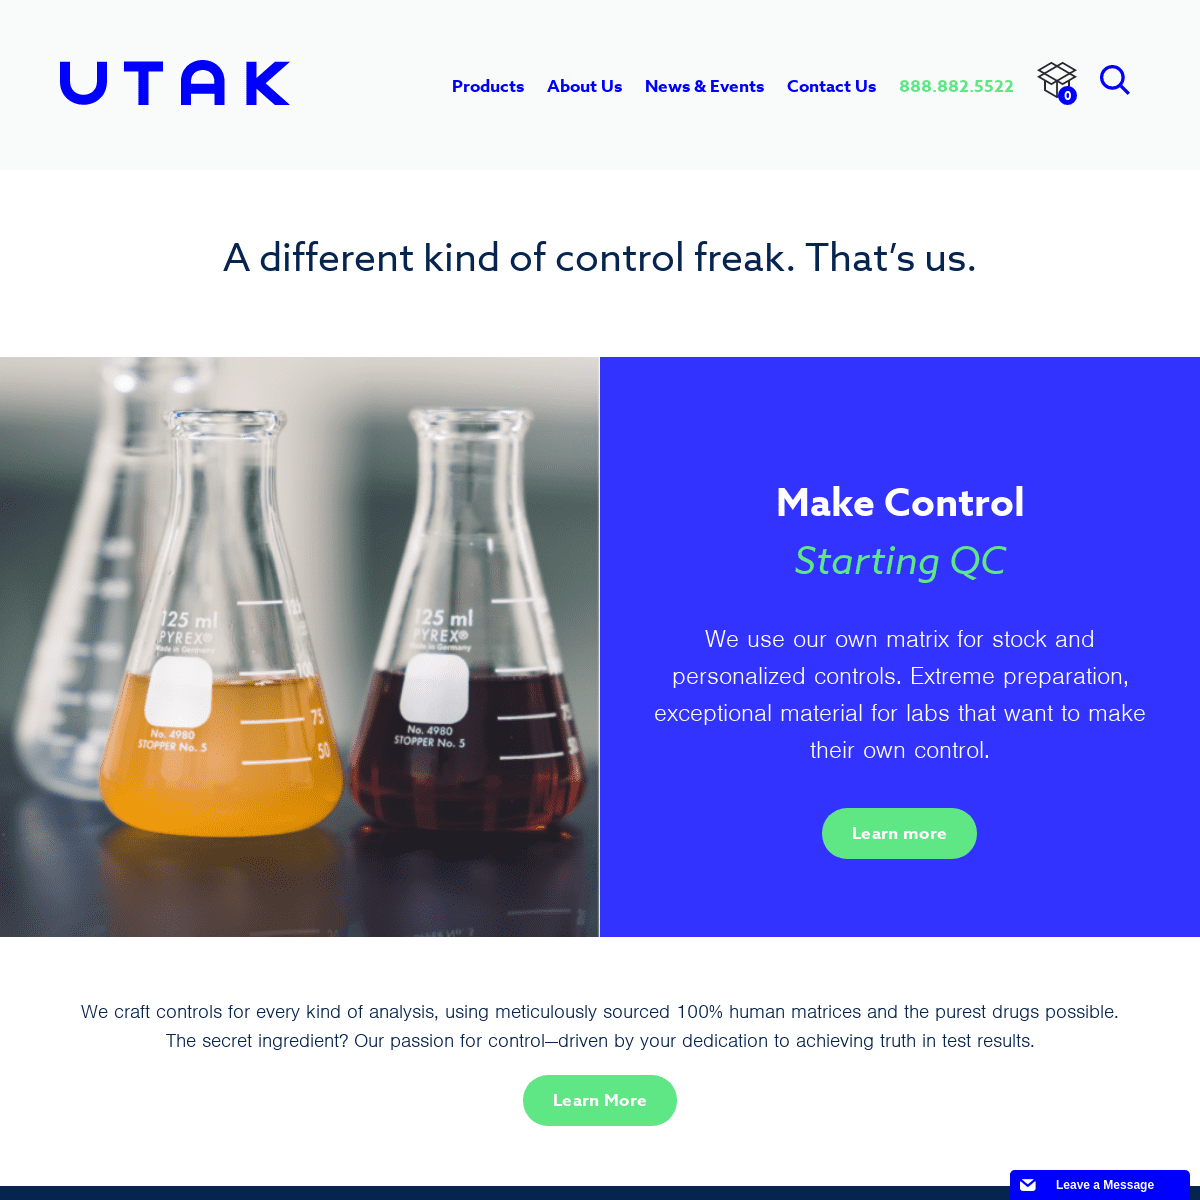 A complete backup of utak.com